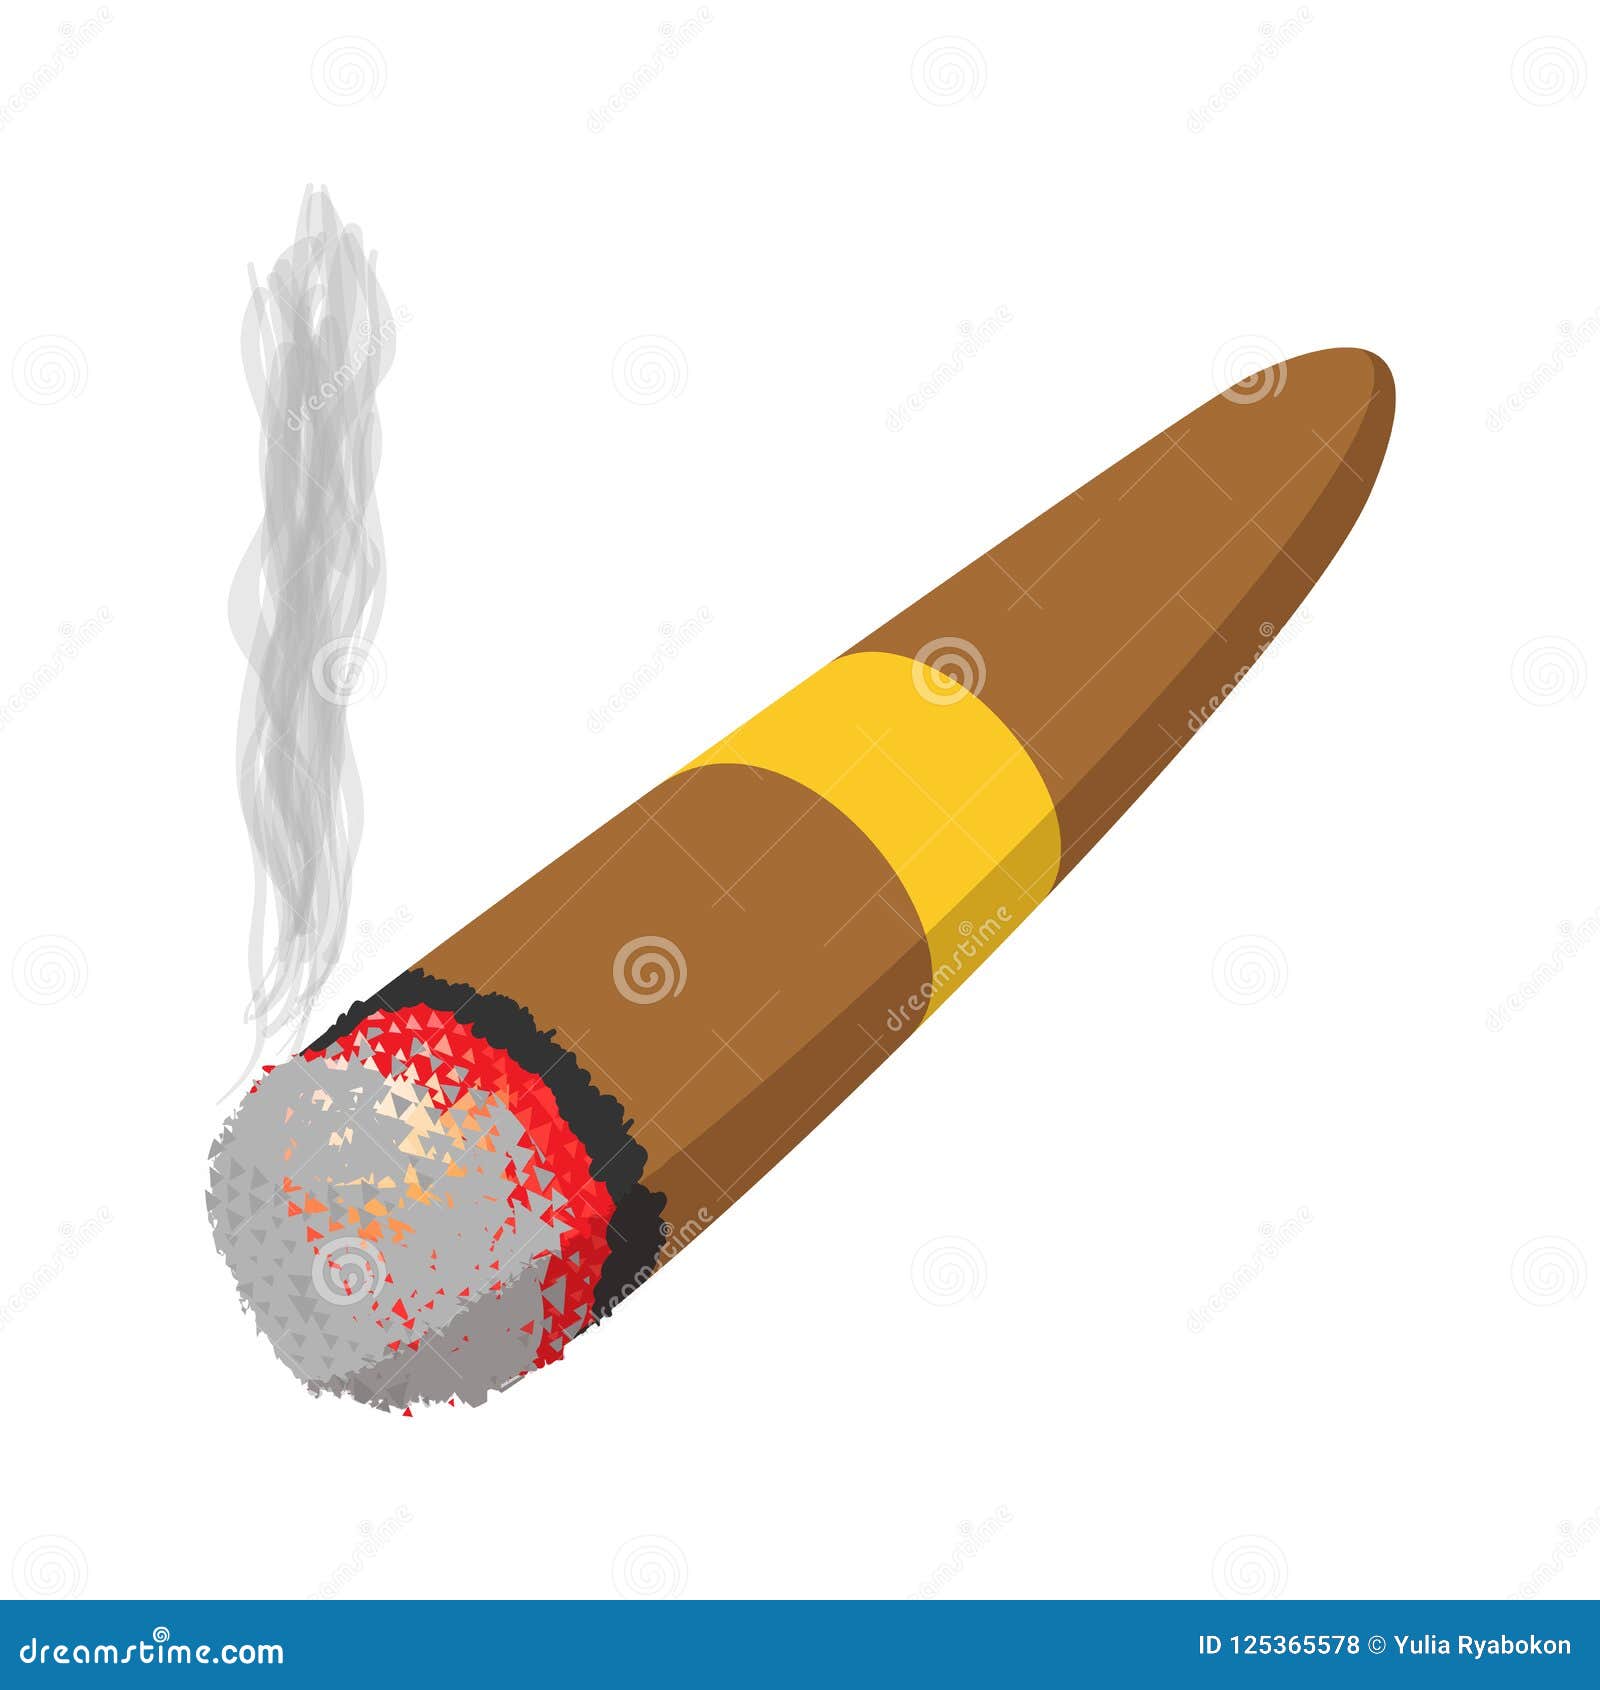 brown cigar burned cartoon icon